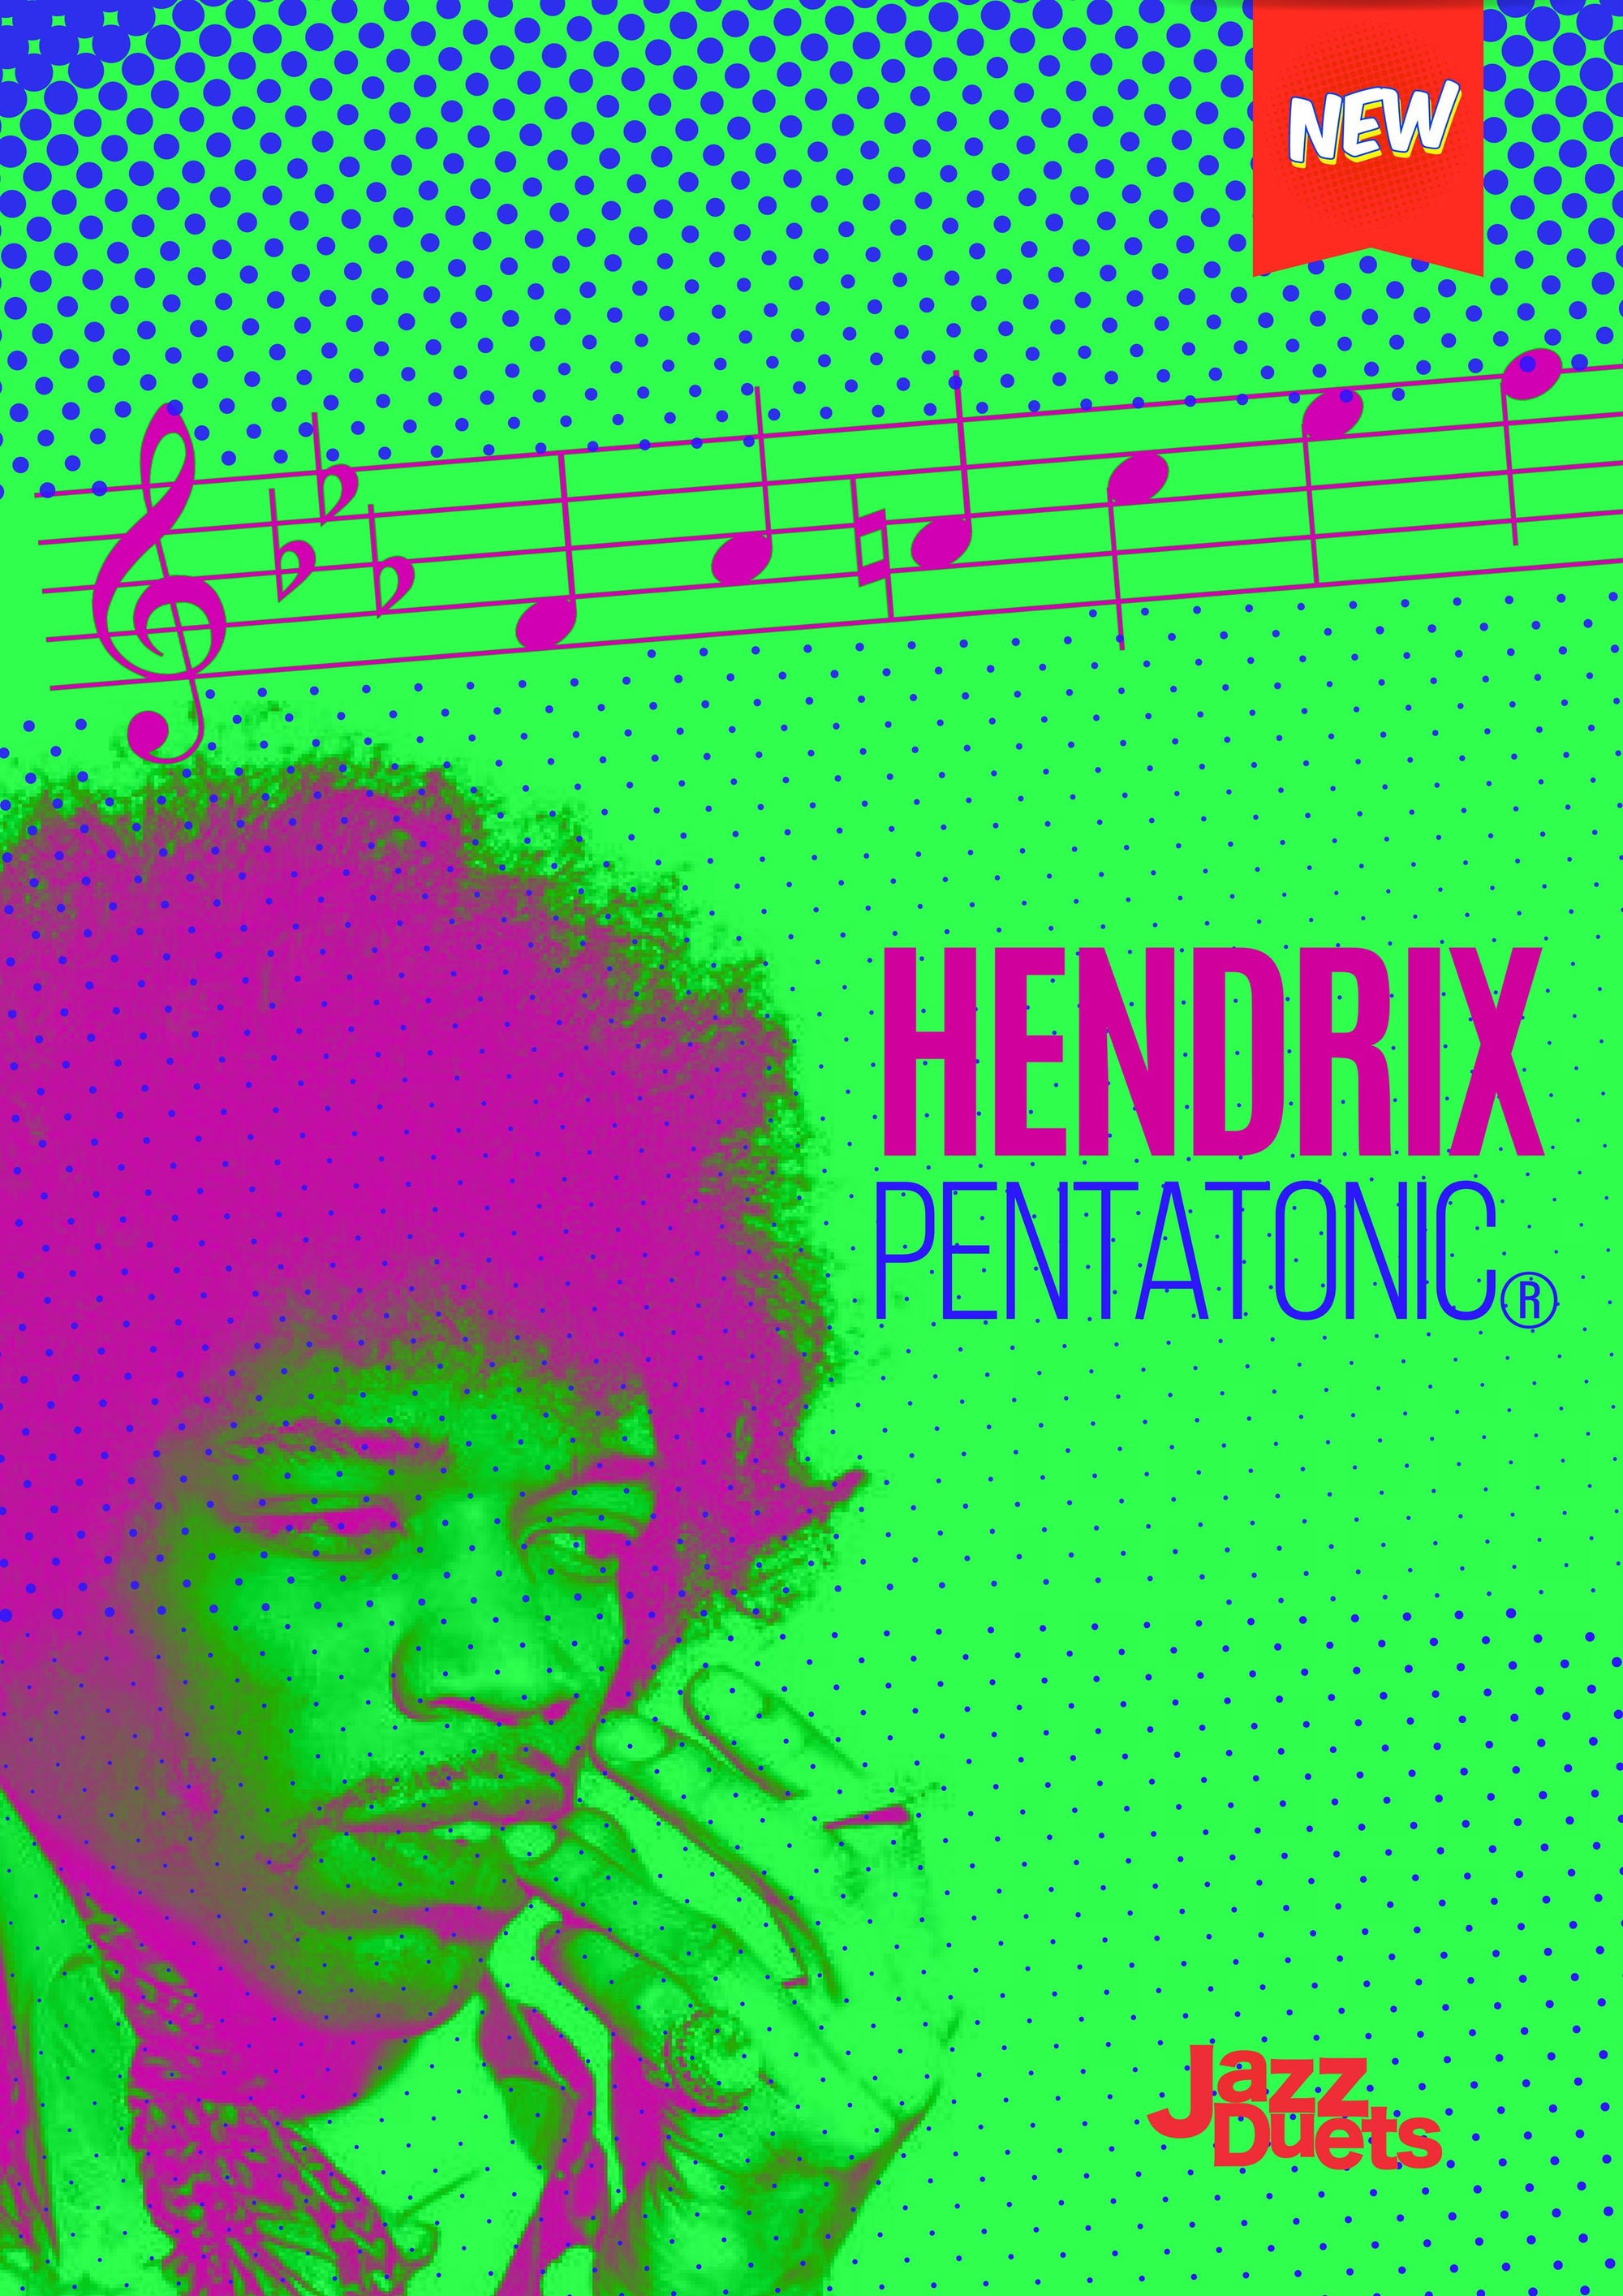 Hendrix Pentatonic- Jazzduets